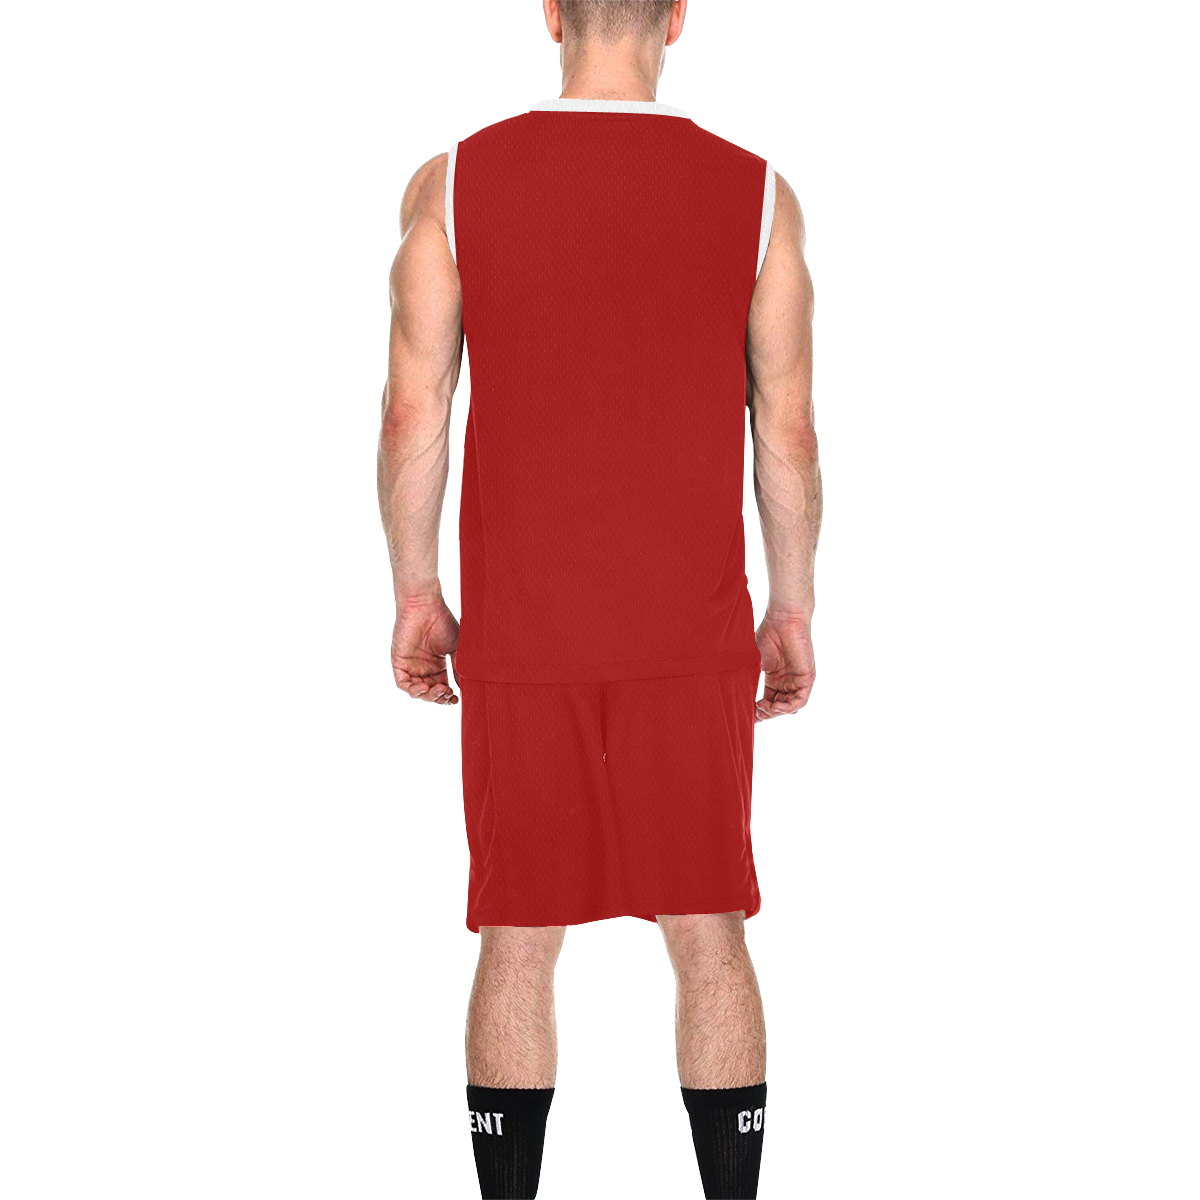 Canada Team Basketball Uniforms All Over Print Basketball Uniform